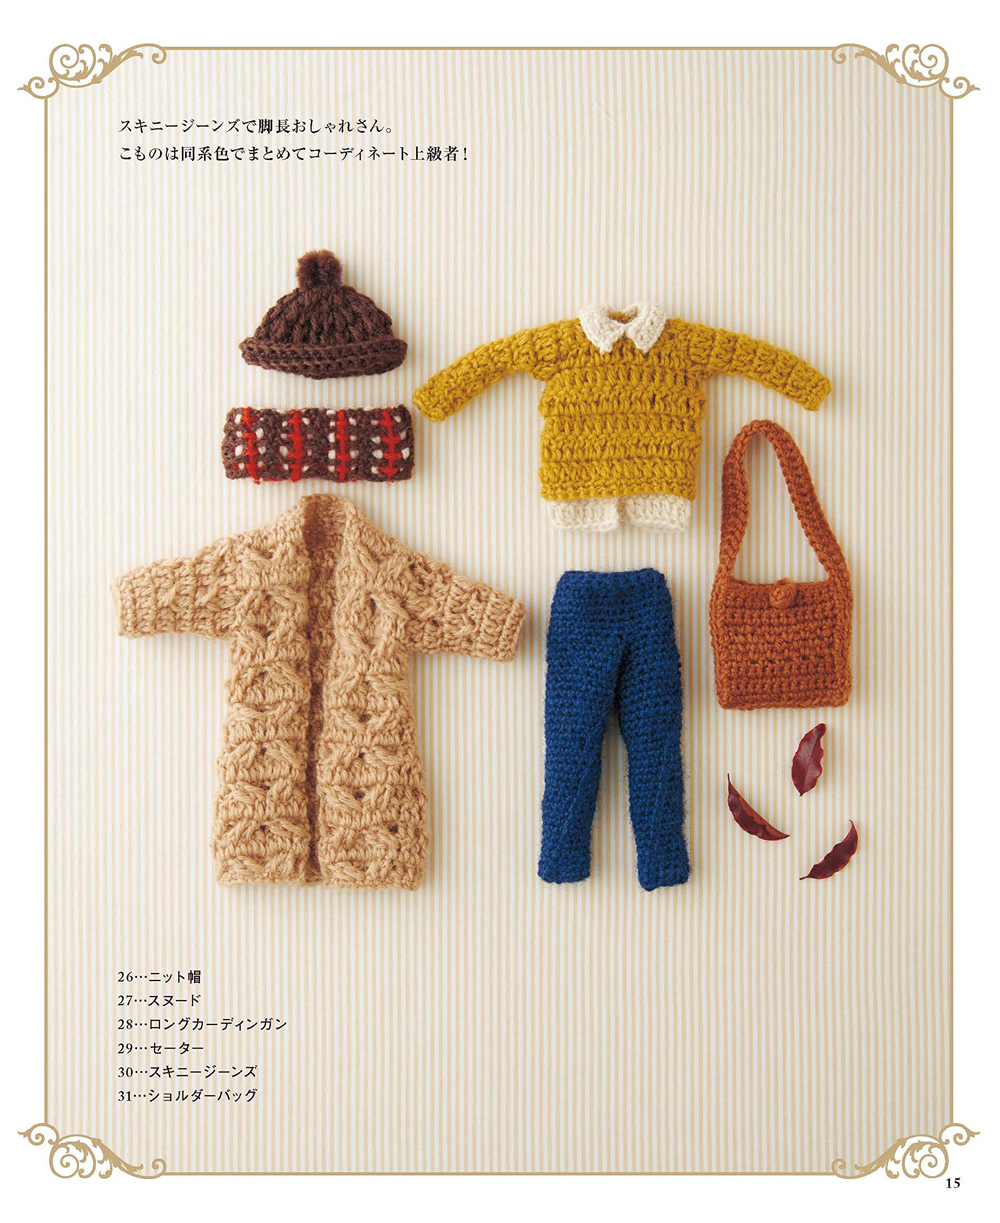 Cute crochet Lica all season closet